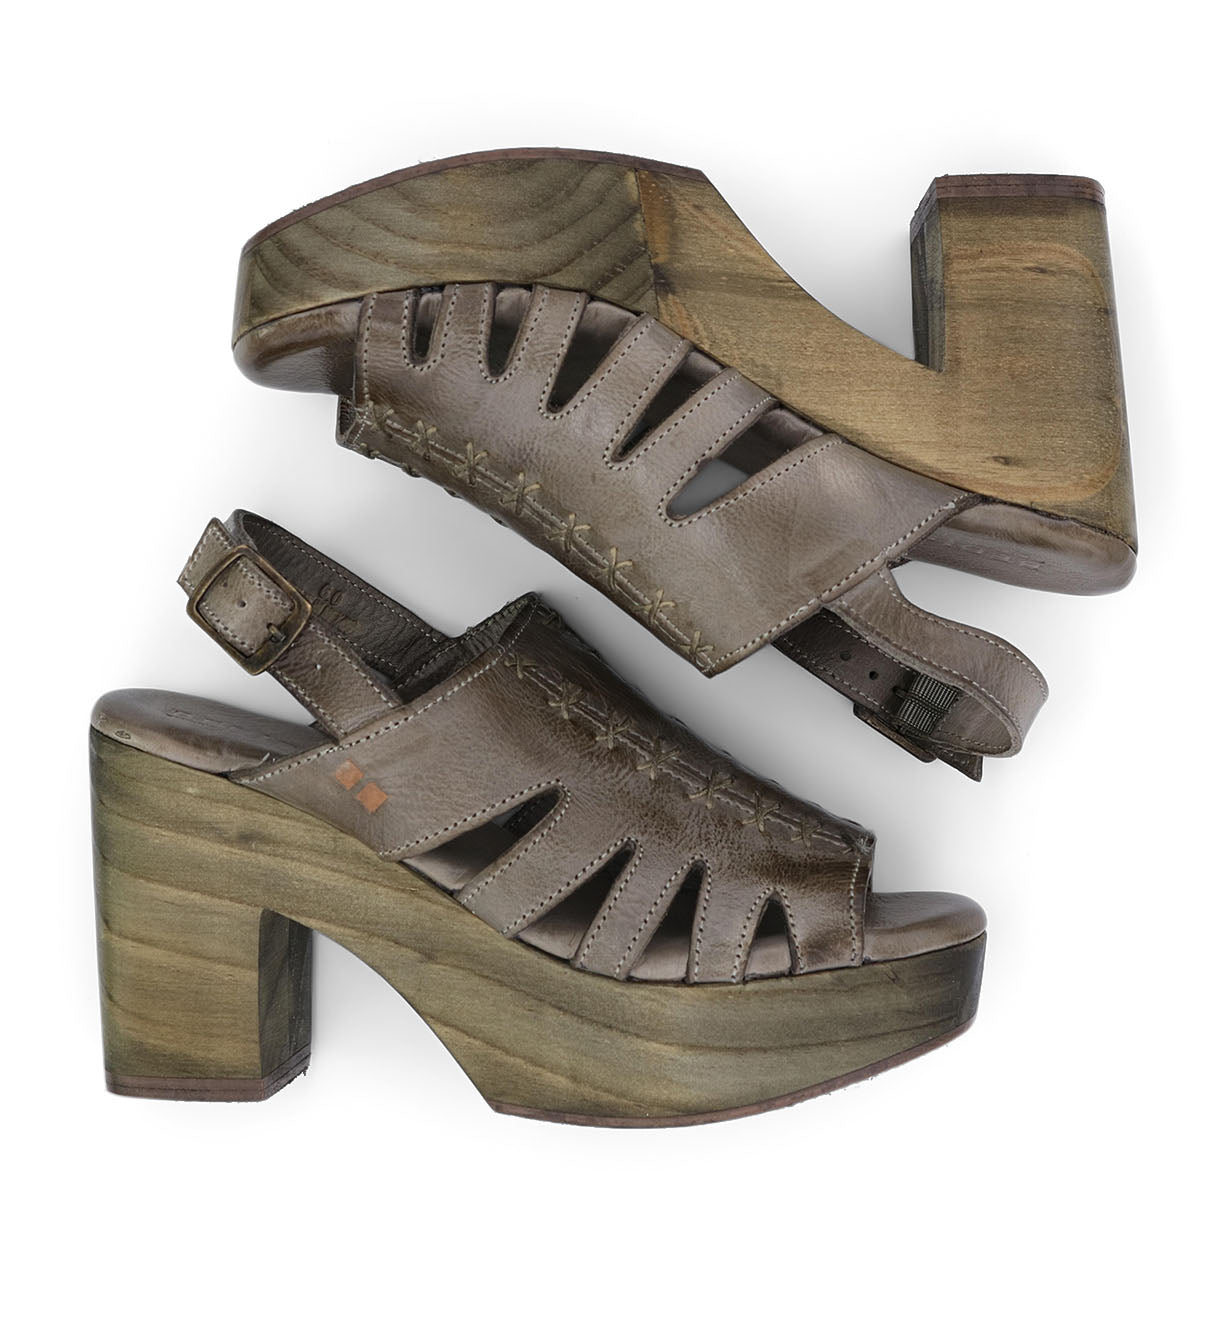 A pair of Bed Stu Fontella women's sandals with a wooden platform.